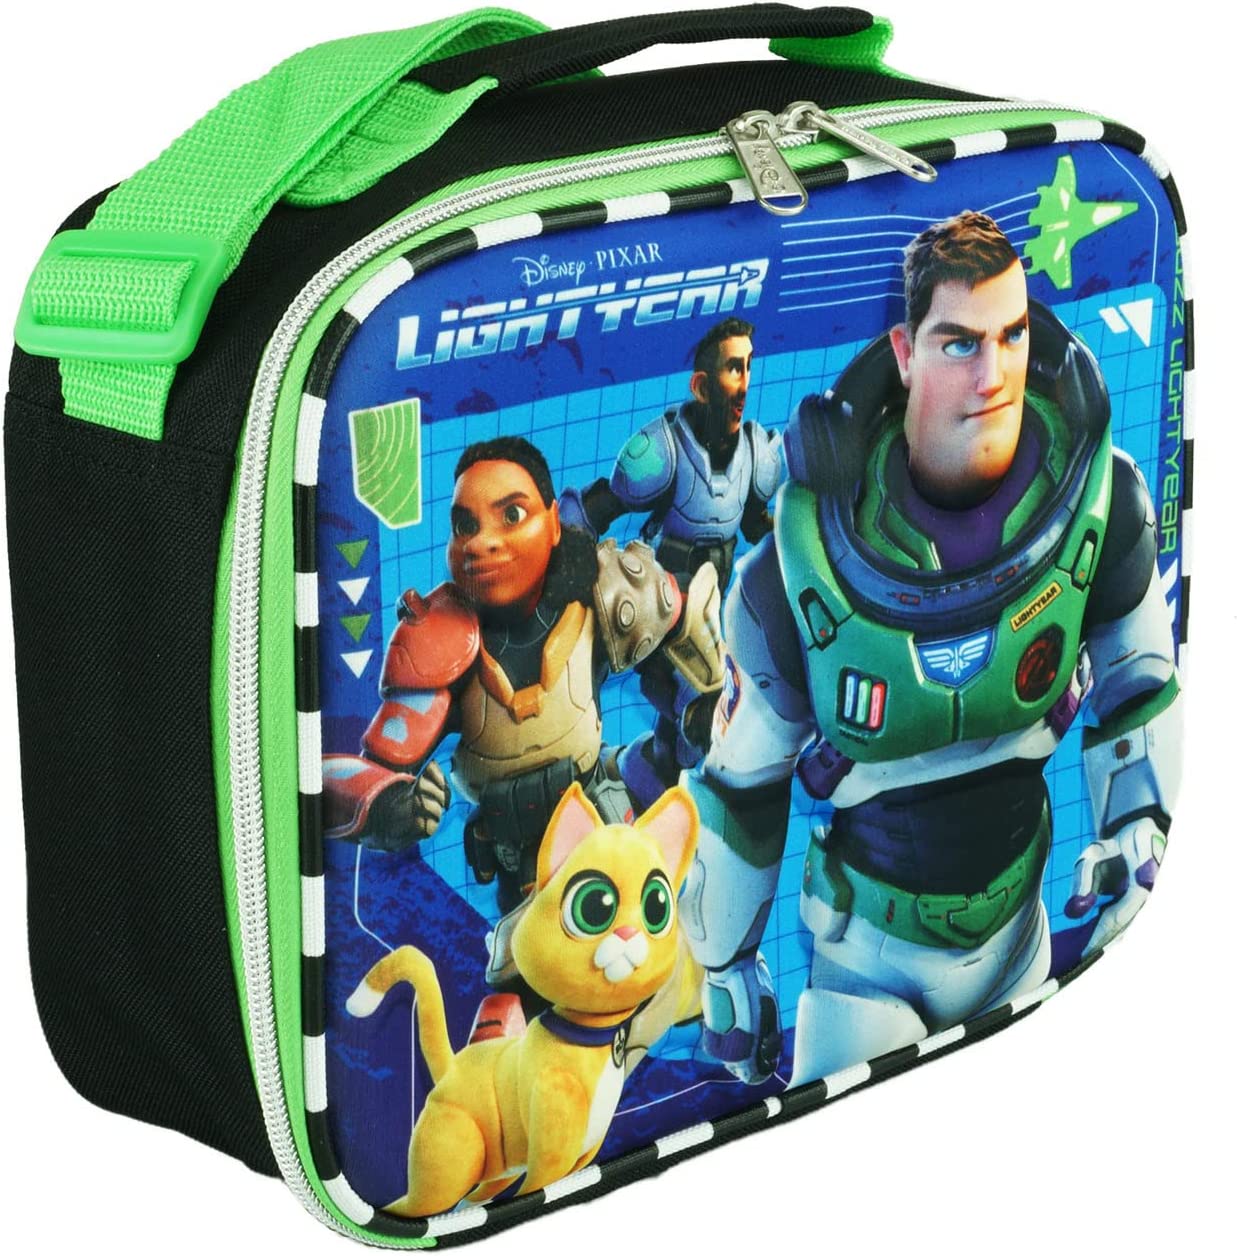 Buzz Lightyear Lunch Bag Box Sox - 3-D EVA Molded